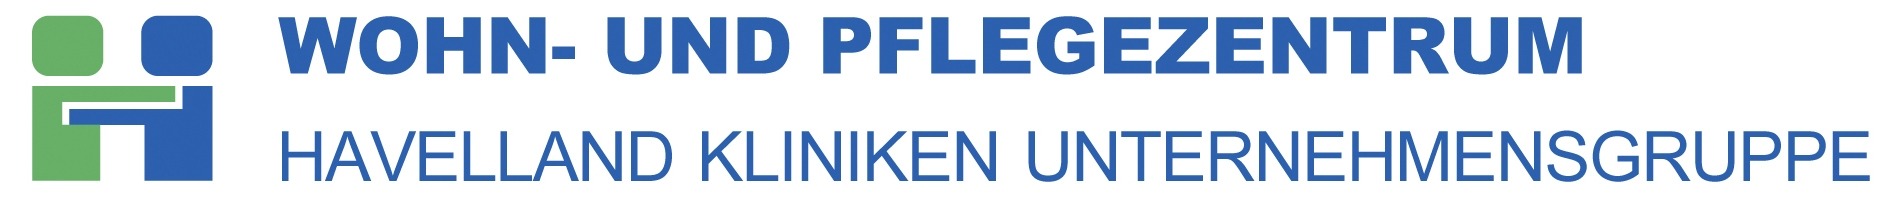 wpz logo